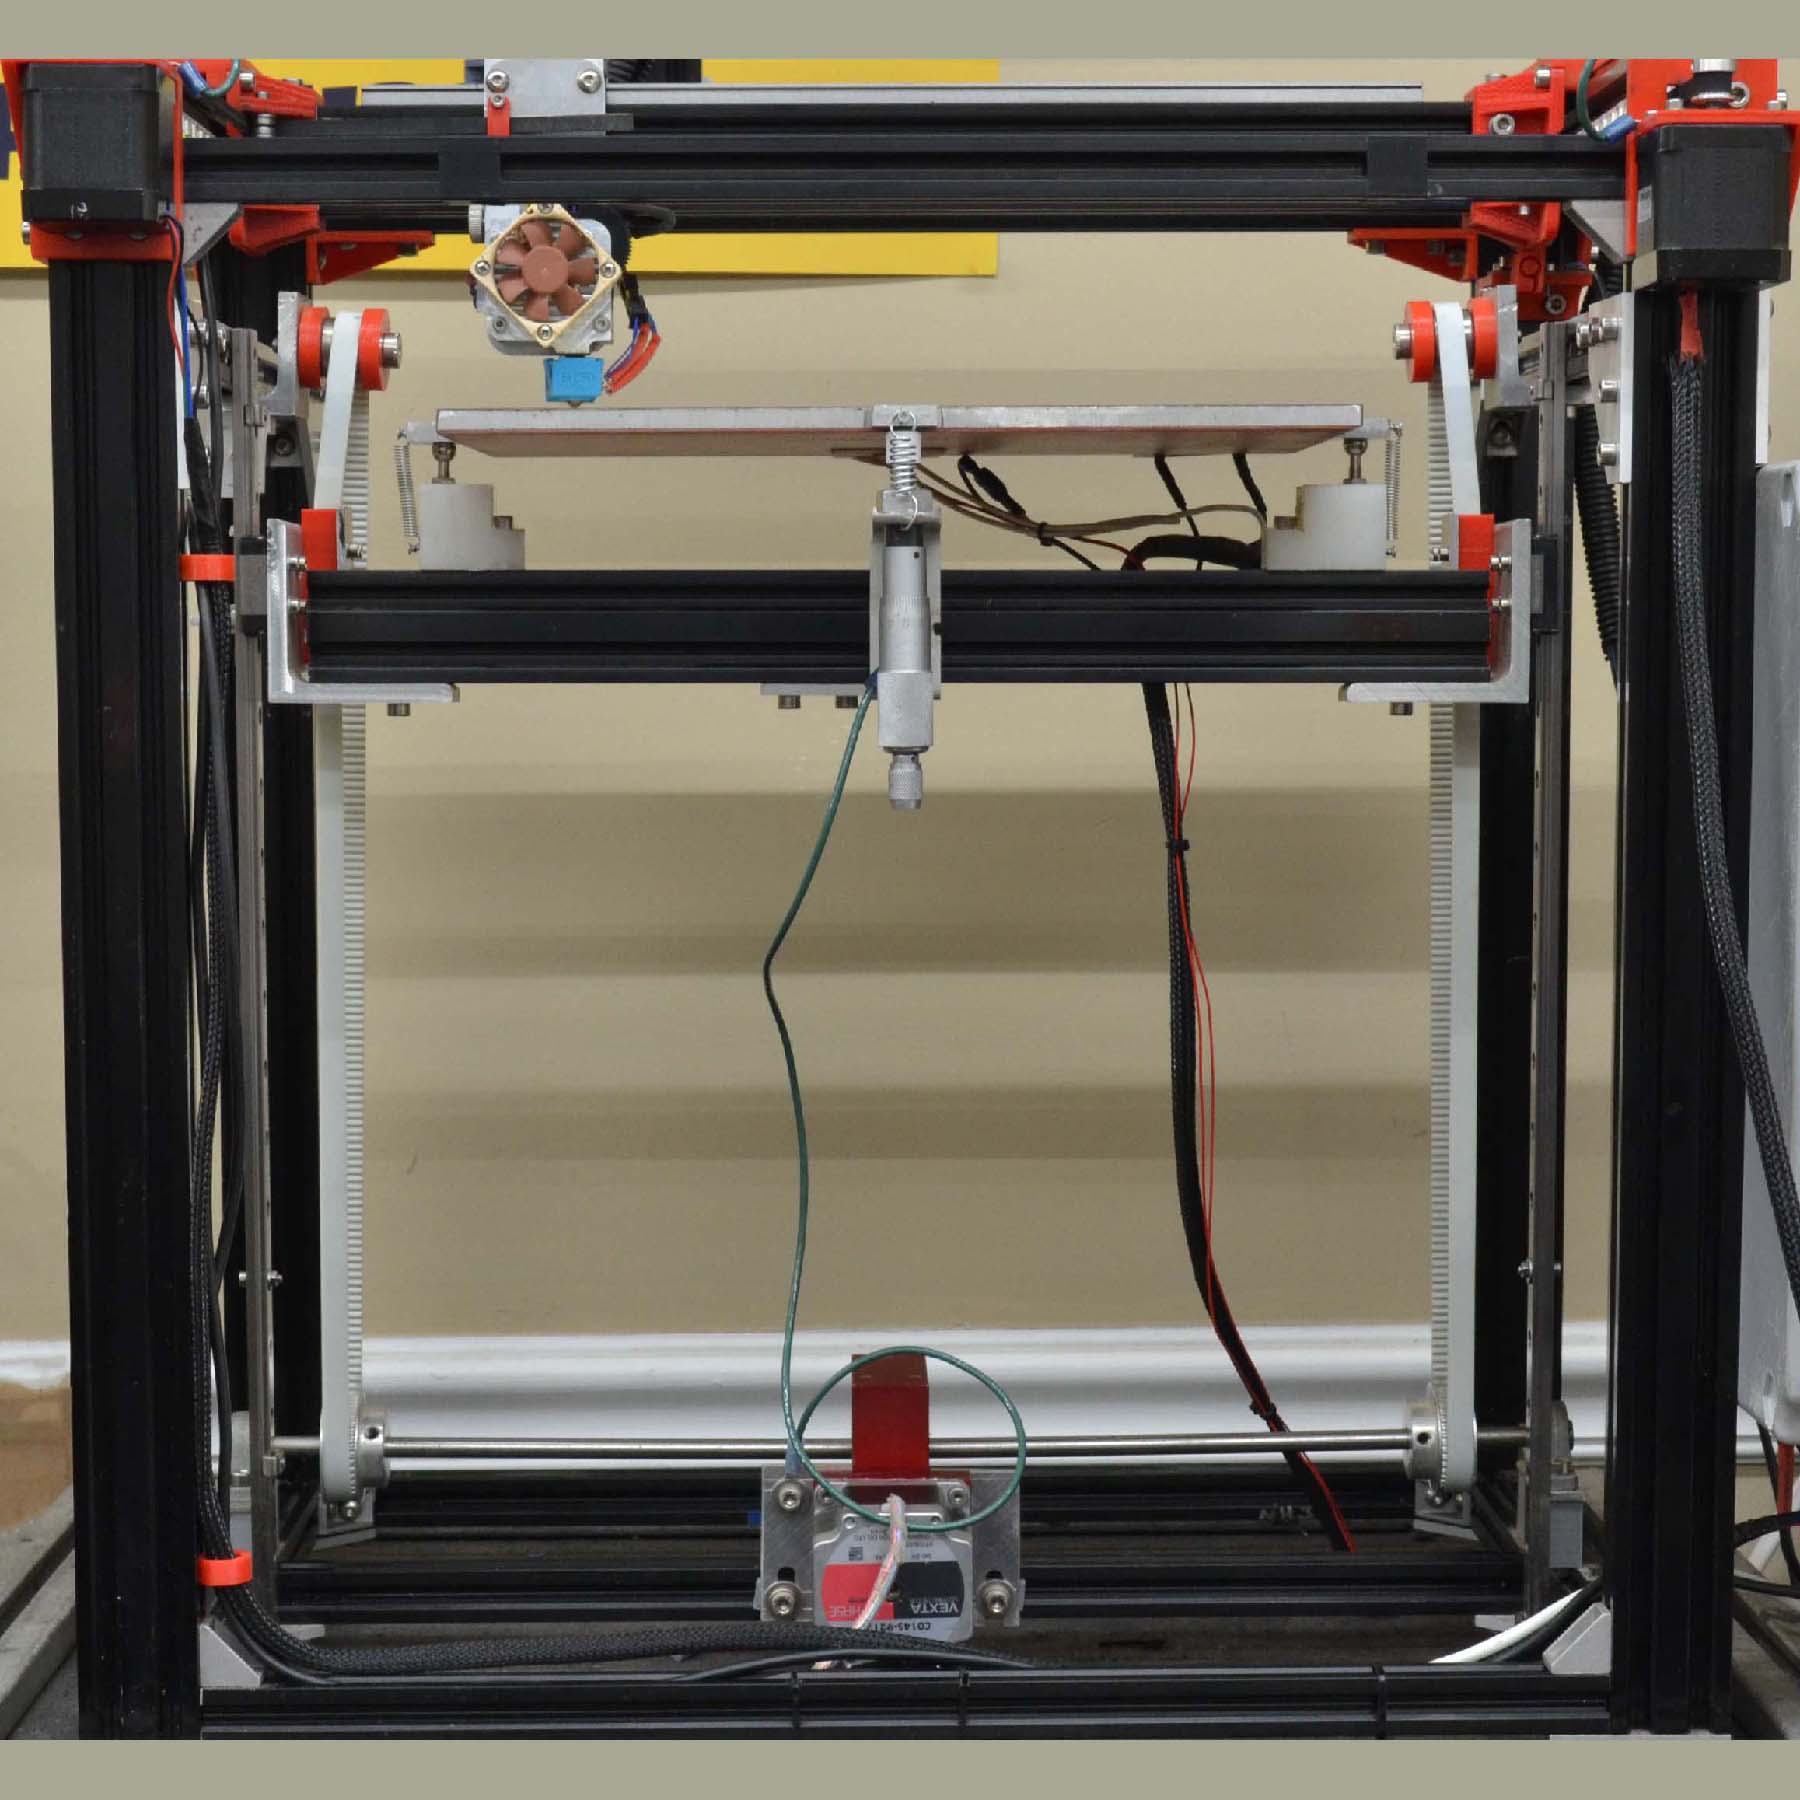 The Wildbot 3D Printer